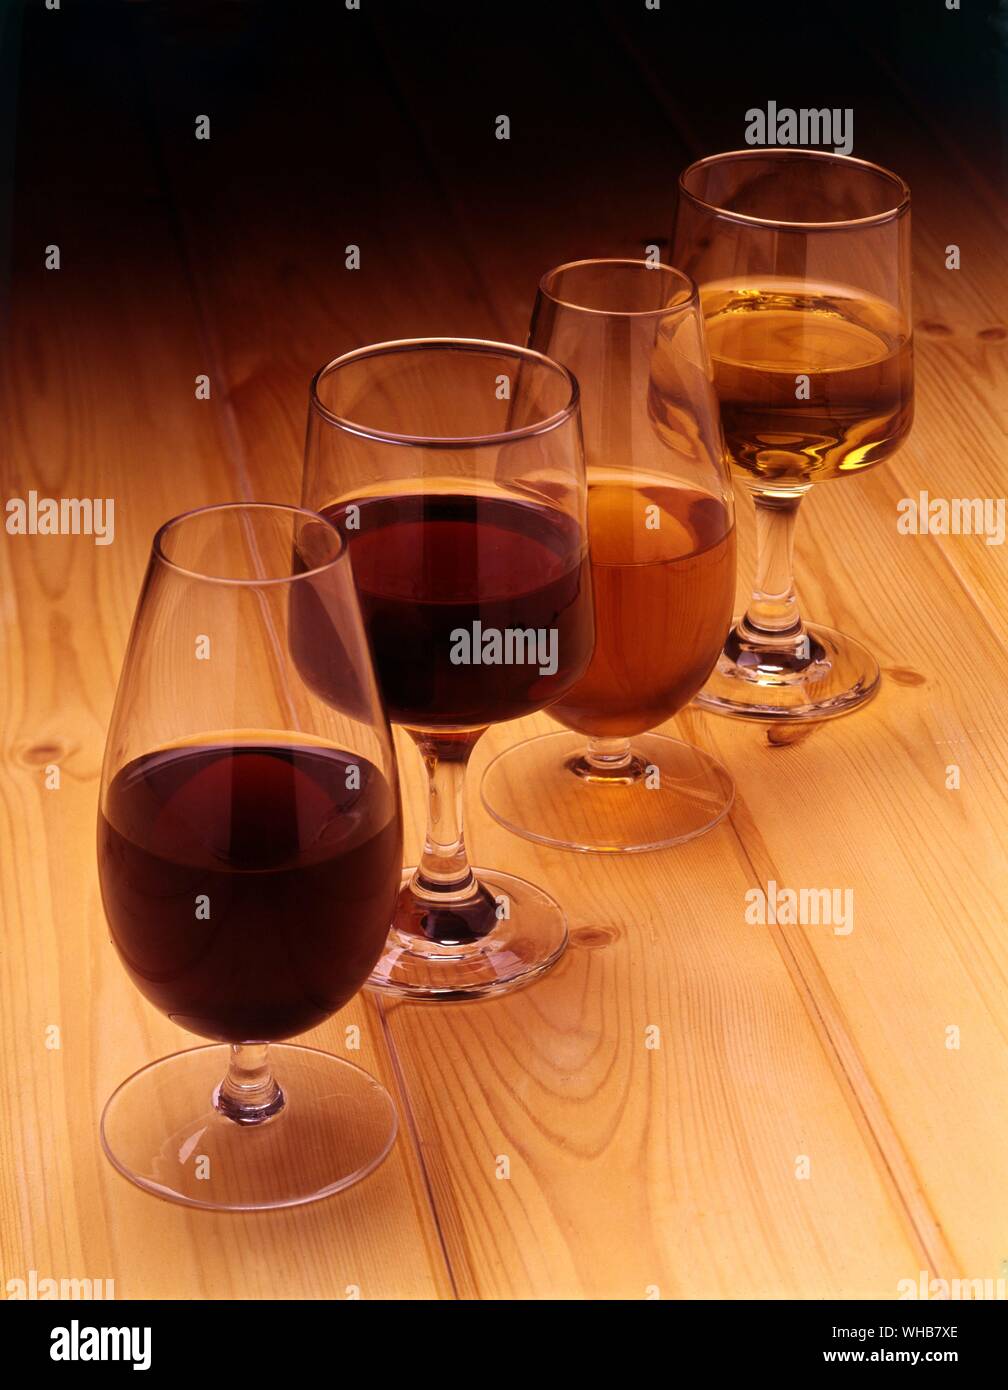 Alcoholic drinks in glasses. Stock Photo